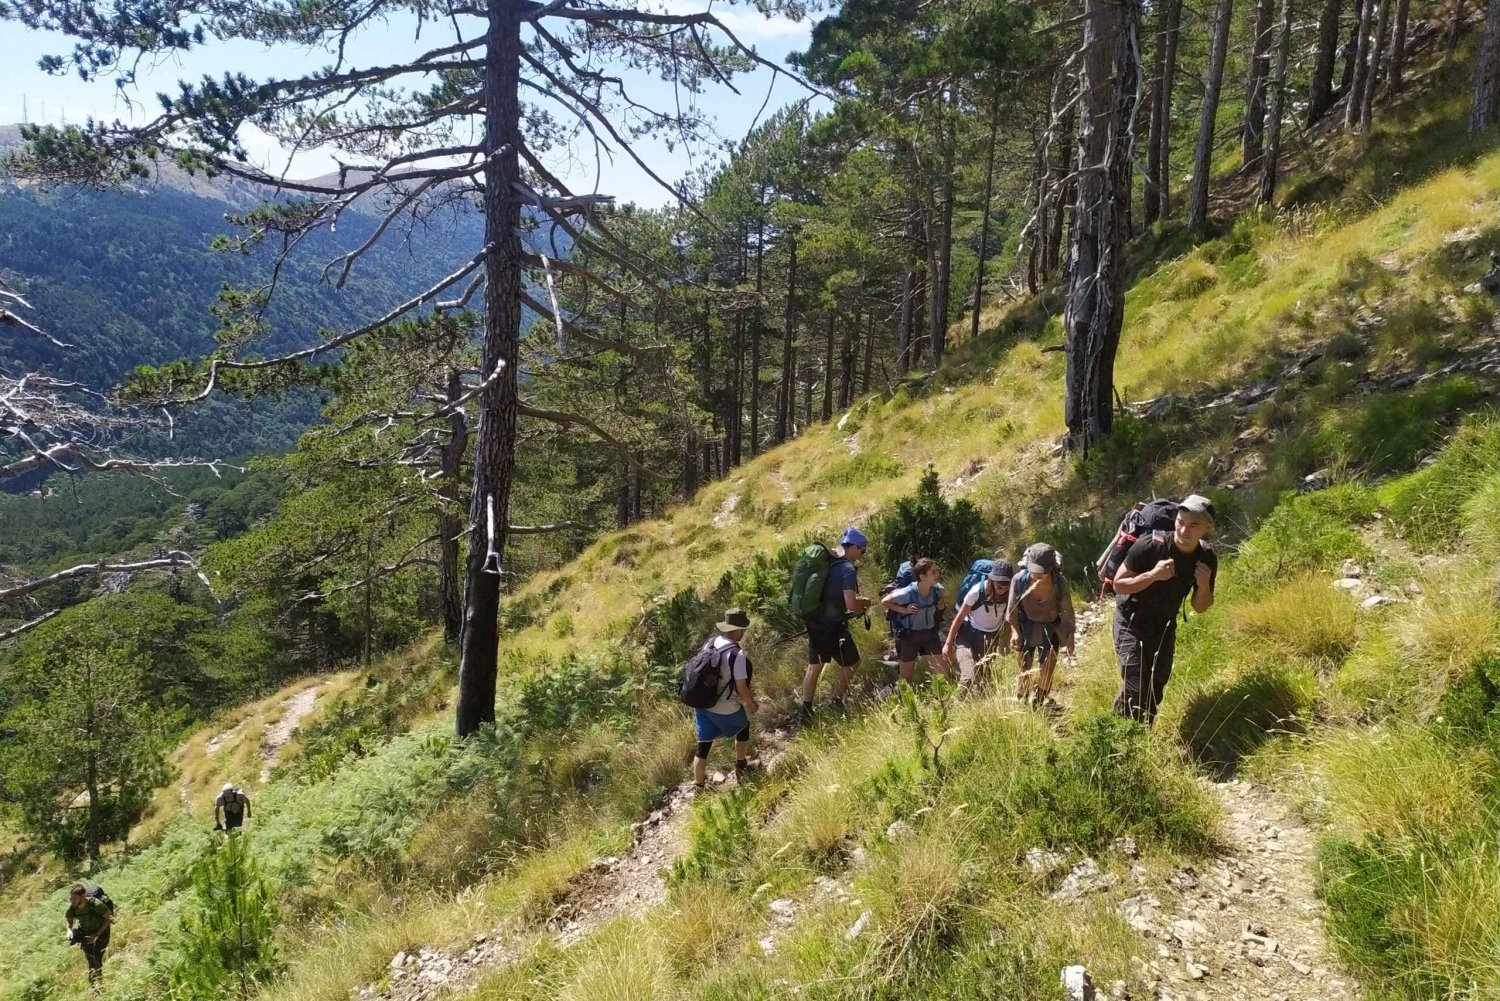 Vlore : Daily hiking at Qorre Peak, Llogara National Park